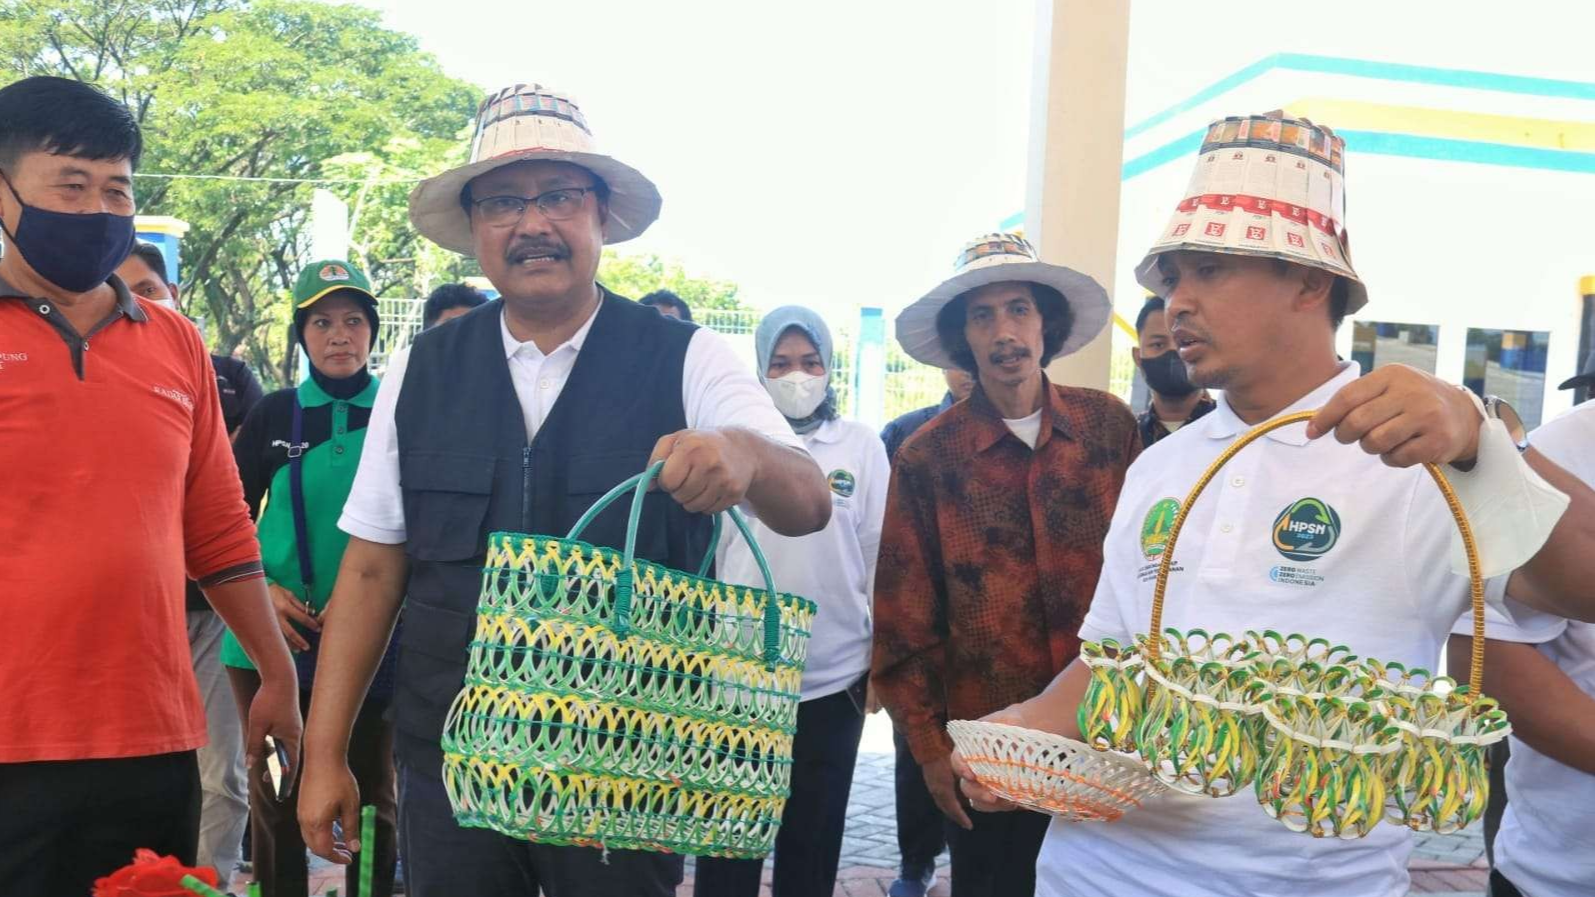 Walikota Pasuruan, Saifullah Yusuf (Gus Ipul), dan wakilnya Adi Wibowo, memperlihatkan hasil karya dari olahan bahan bekas. (Foto: Diskominfo Kota Pasuruan)